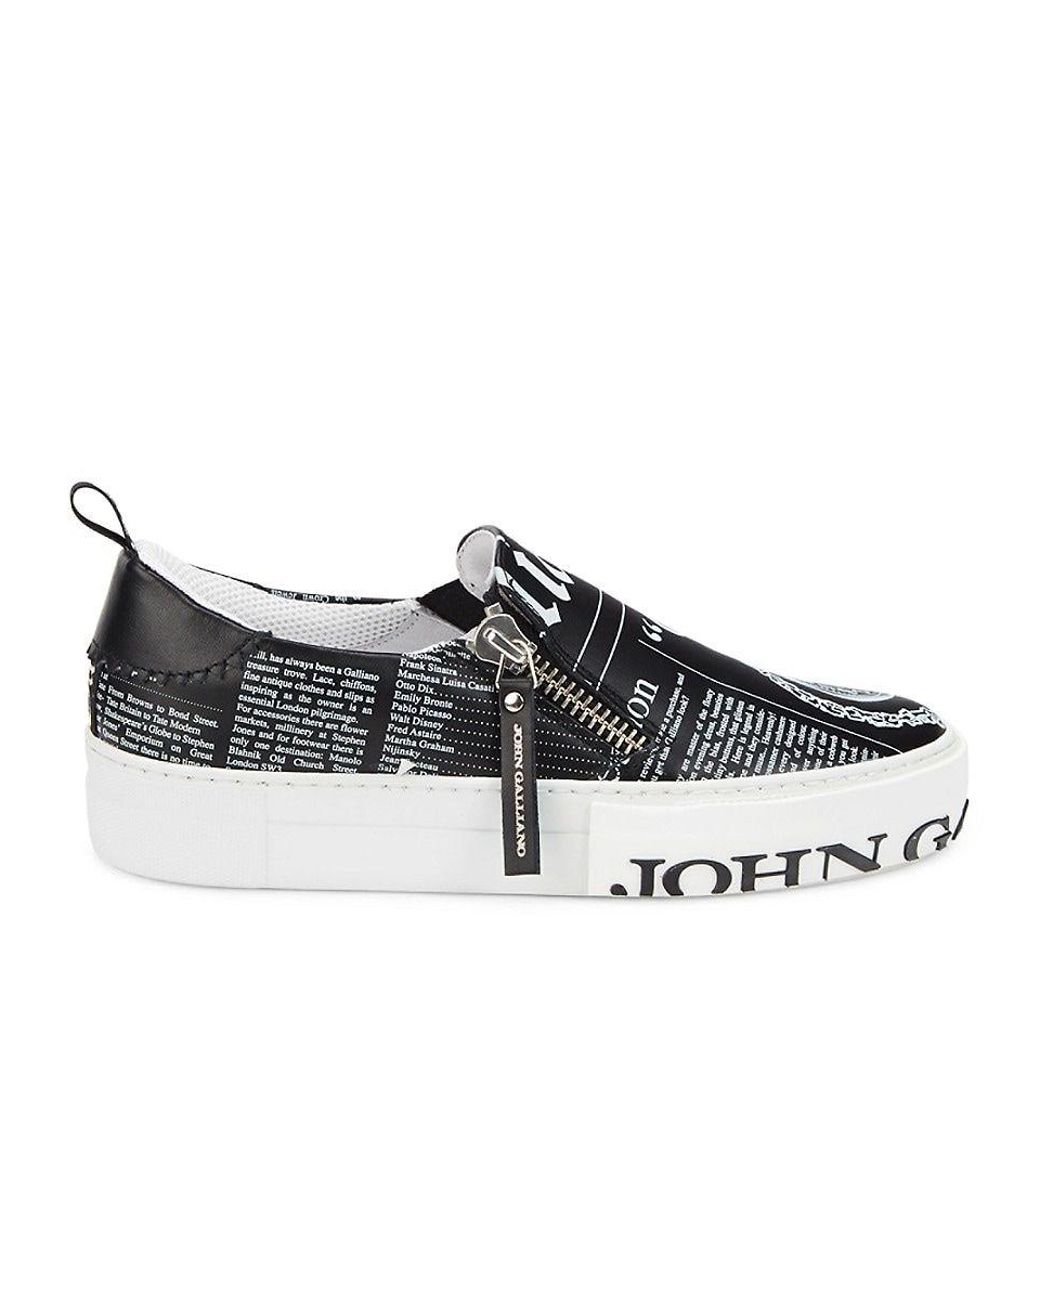 John Galliano Gazette Low Top Leather Sneakers in Black for Men